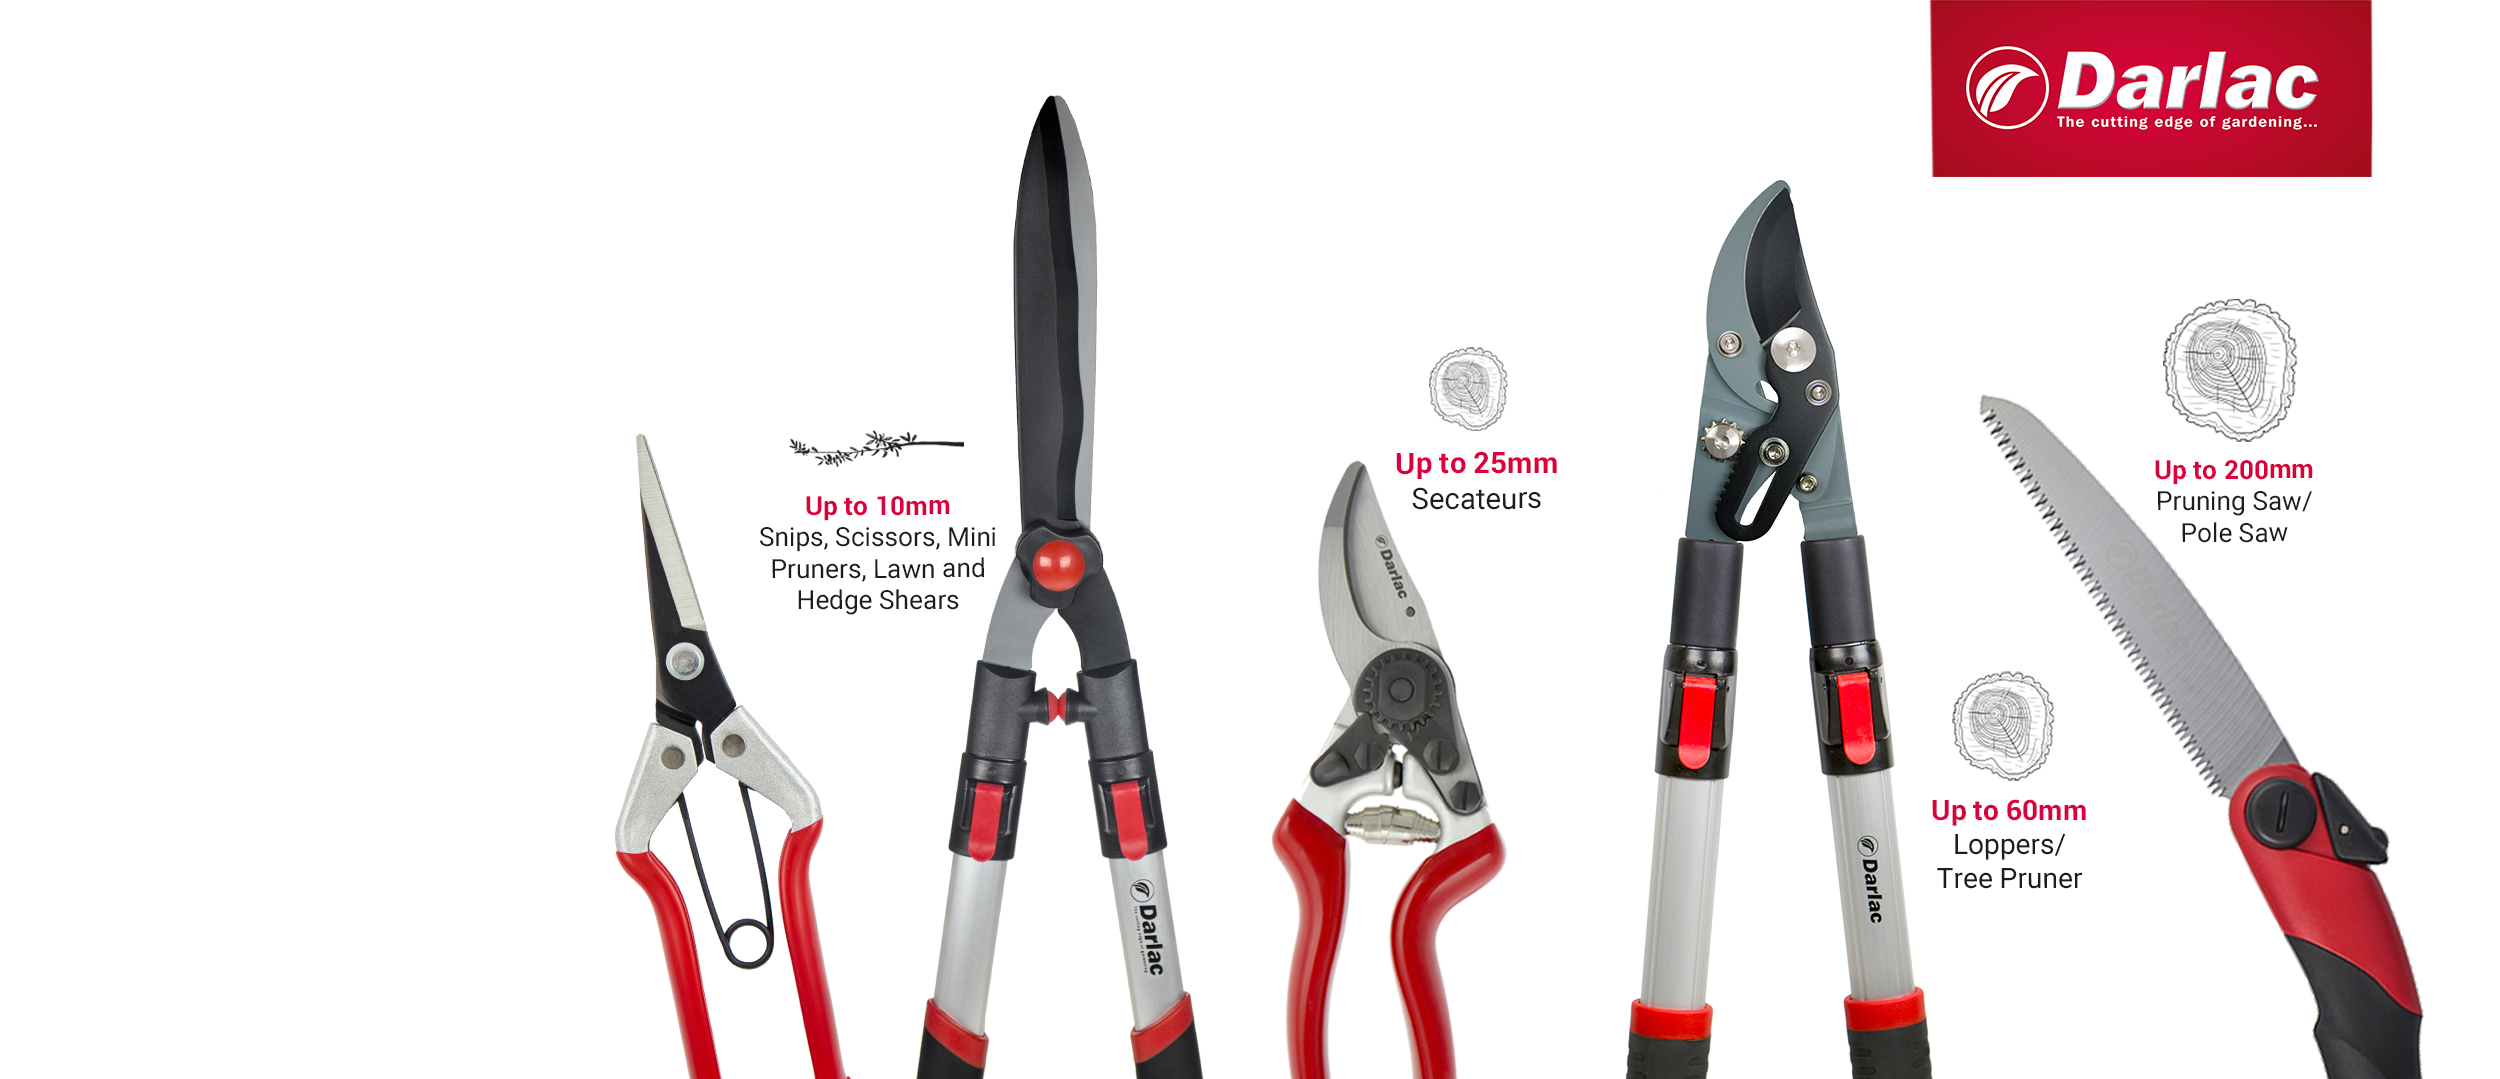 darlac range of cutting tools